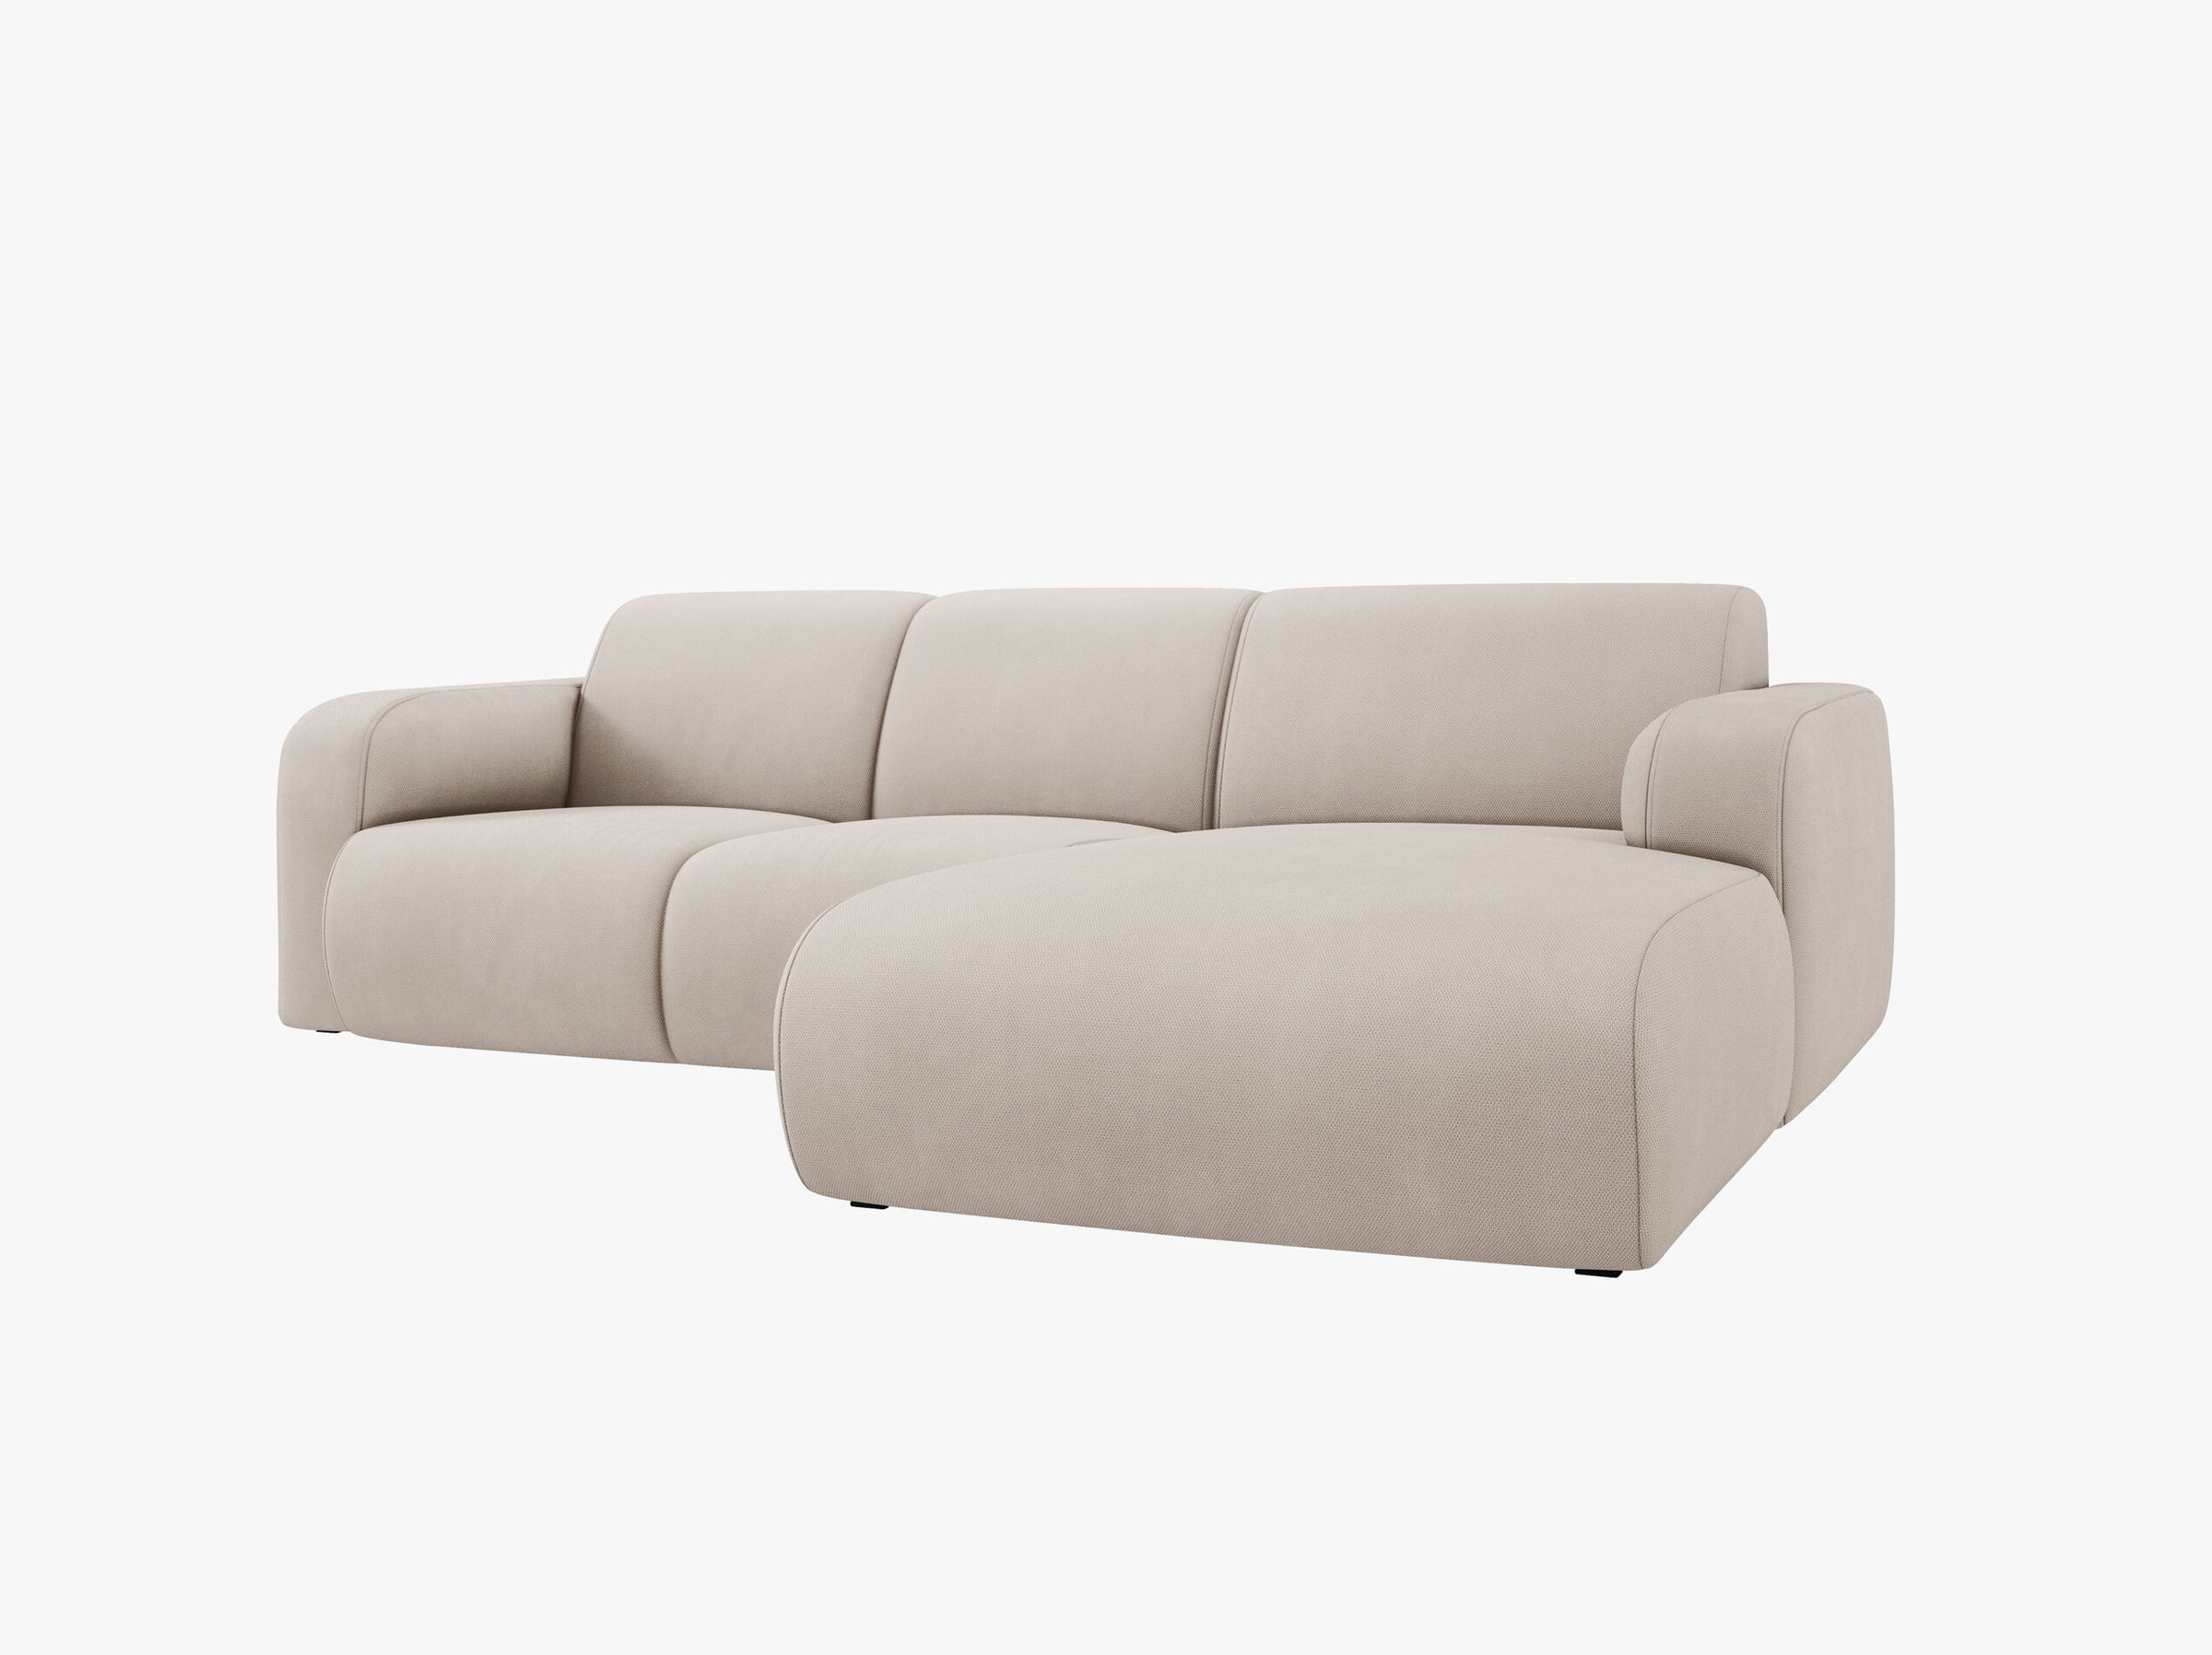 Molino sofas structured fabric beige